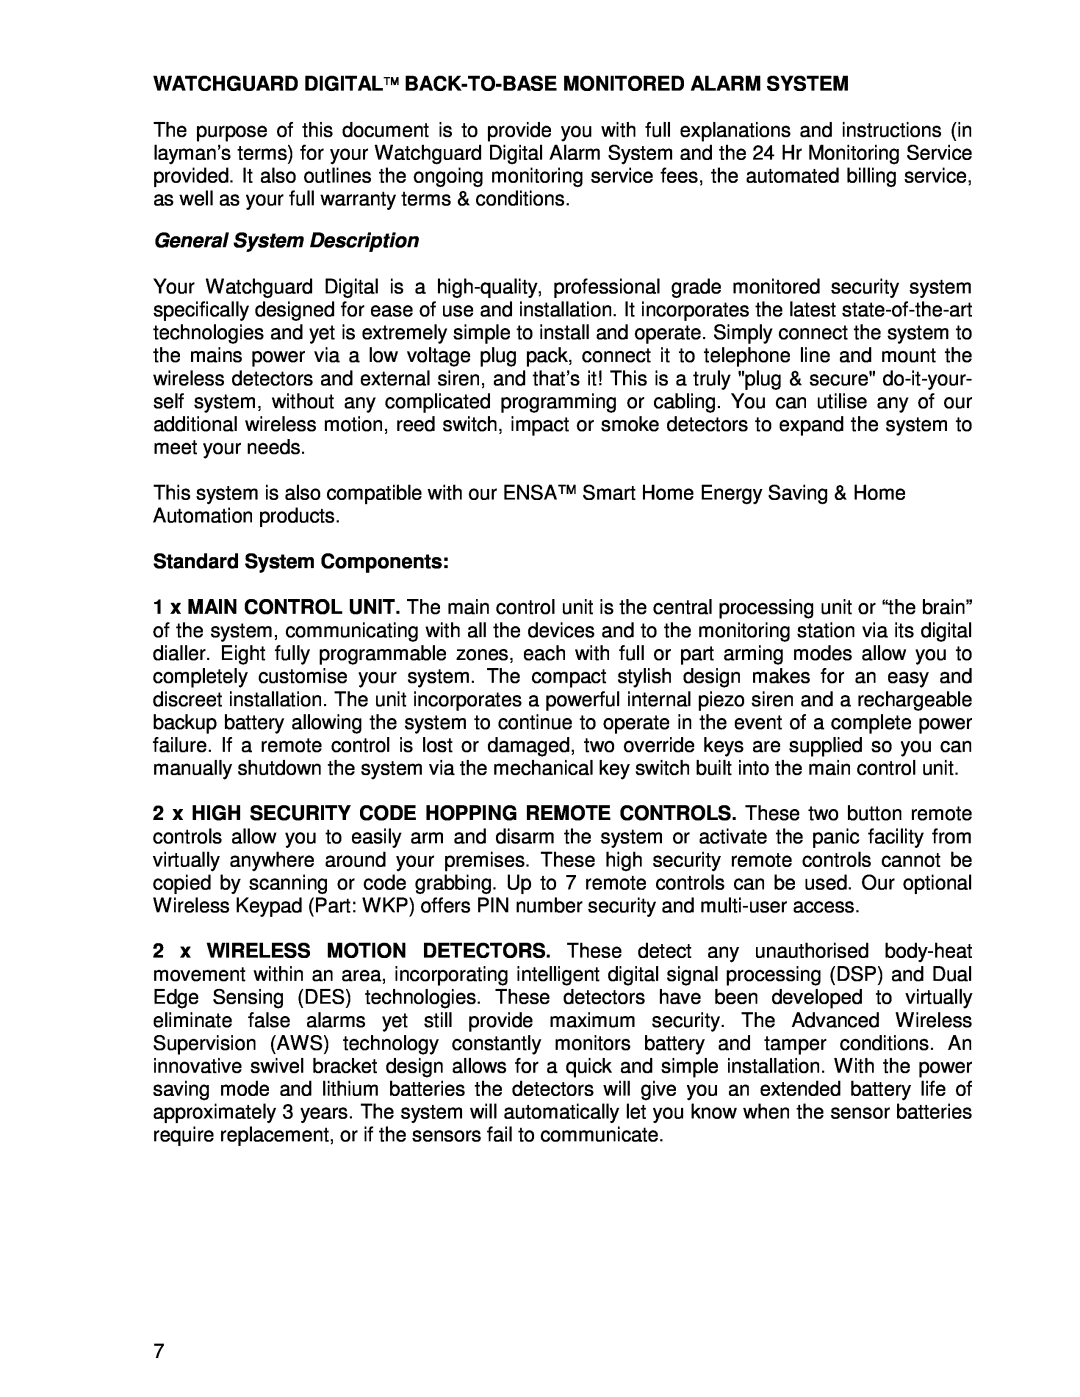 Ironman Fitness V2 instruction manual General System Description, Standard System Components 